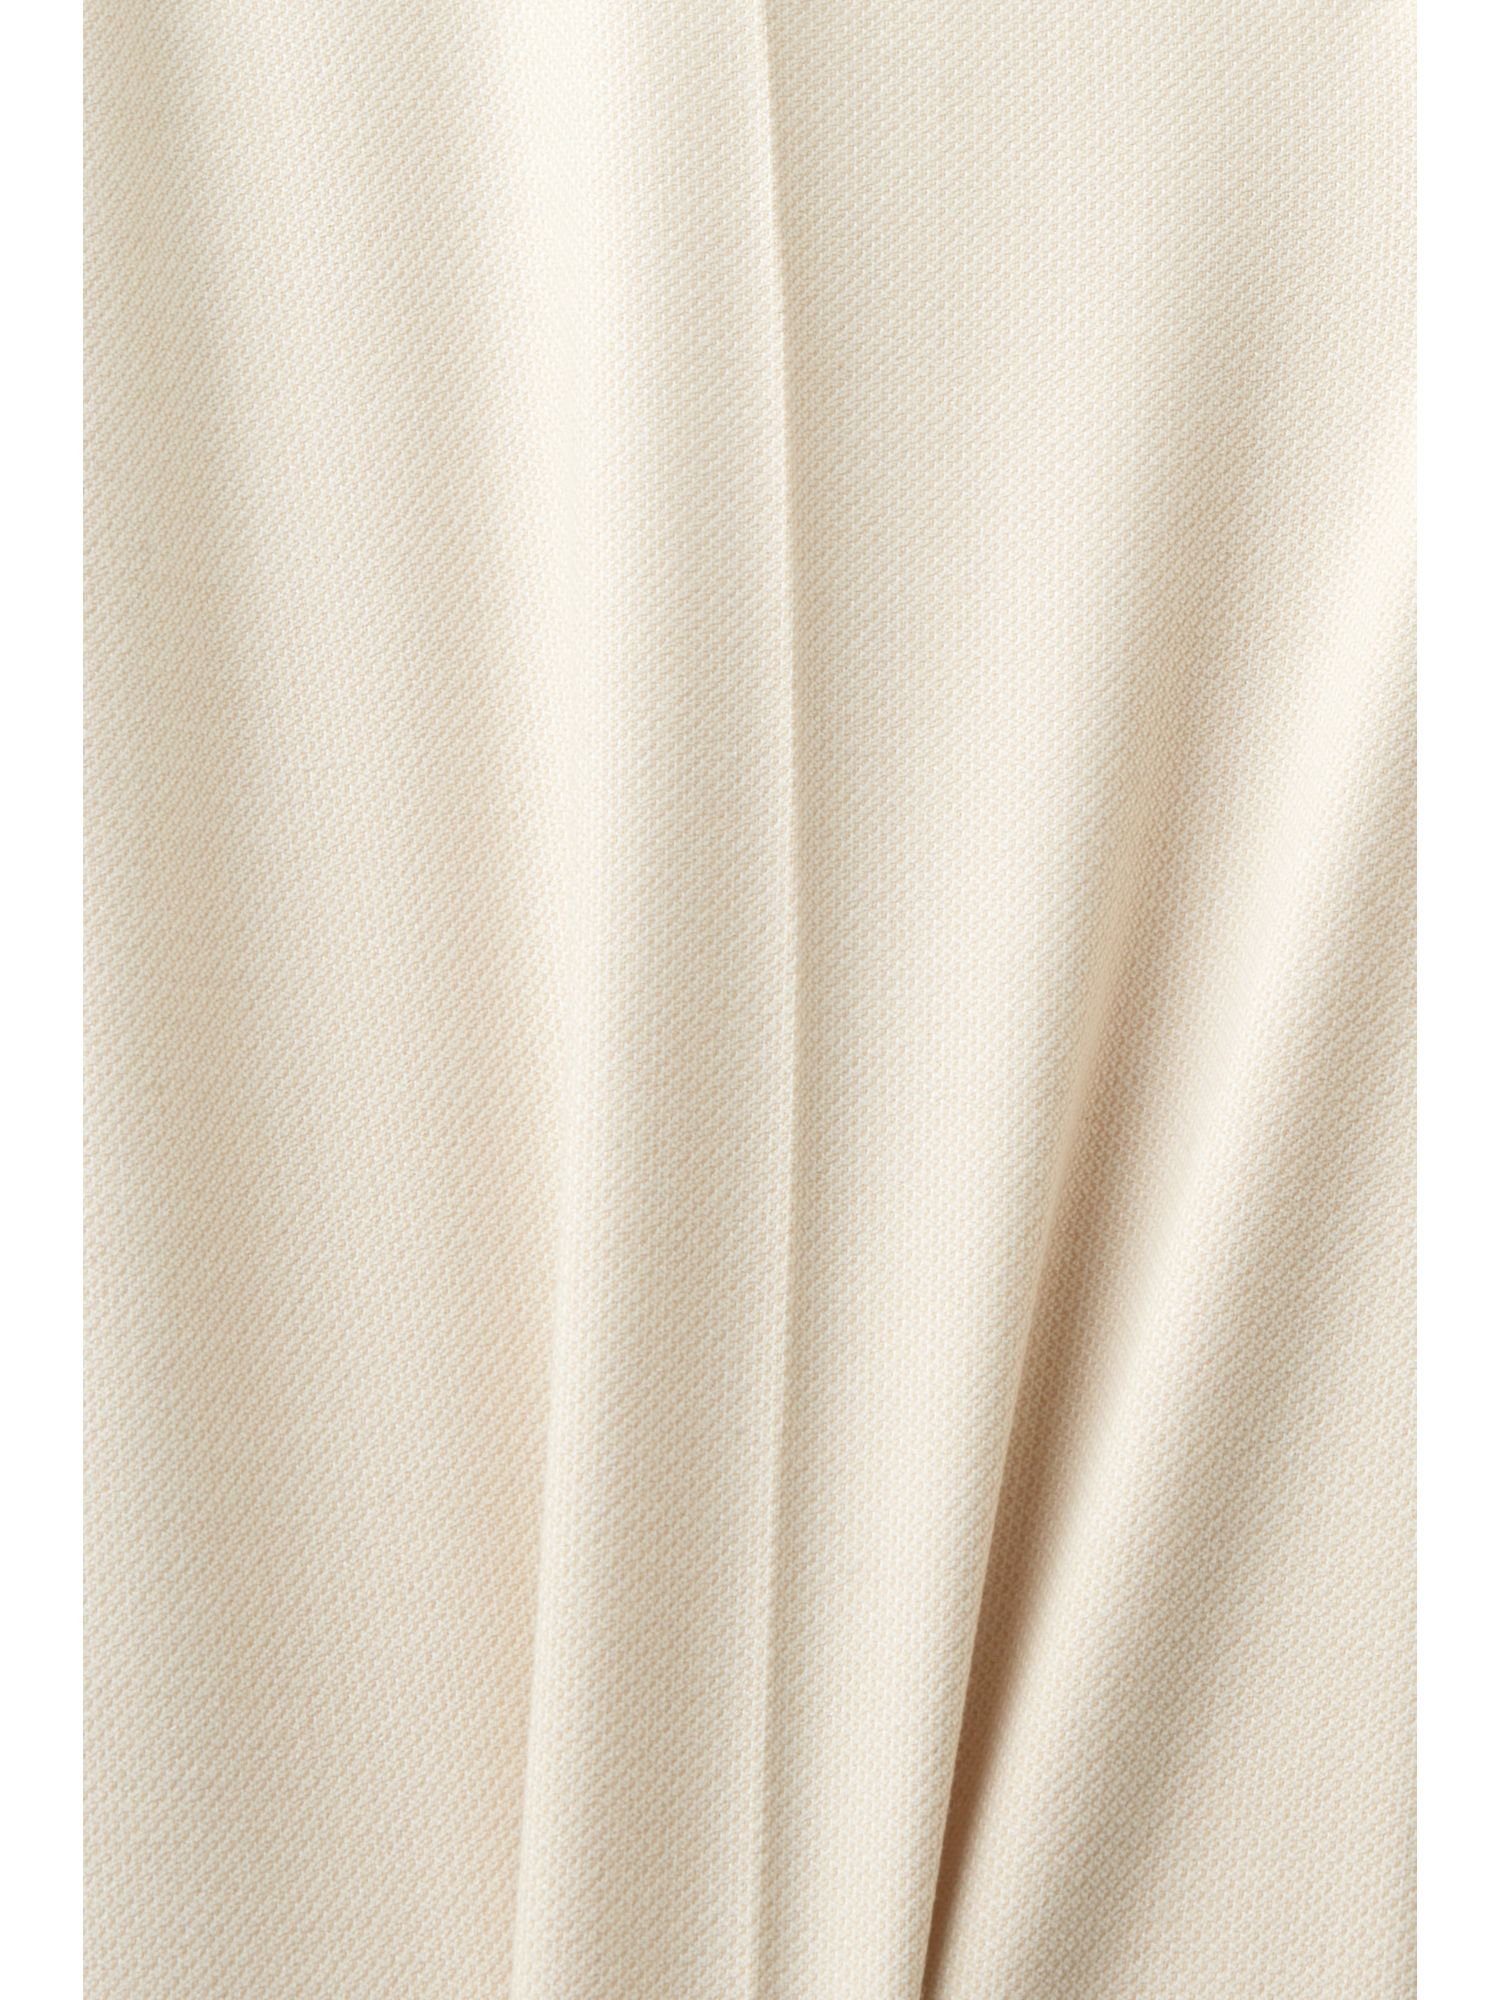 Esprit Collection mit Bund 7/8-Hose Elegante Cropped-Hose hohem